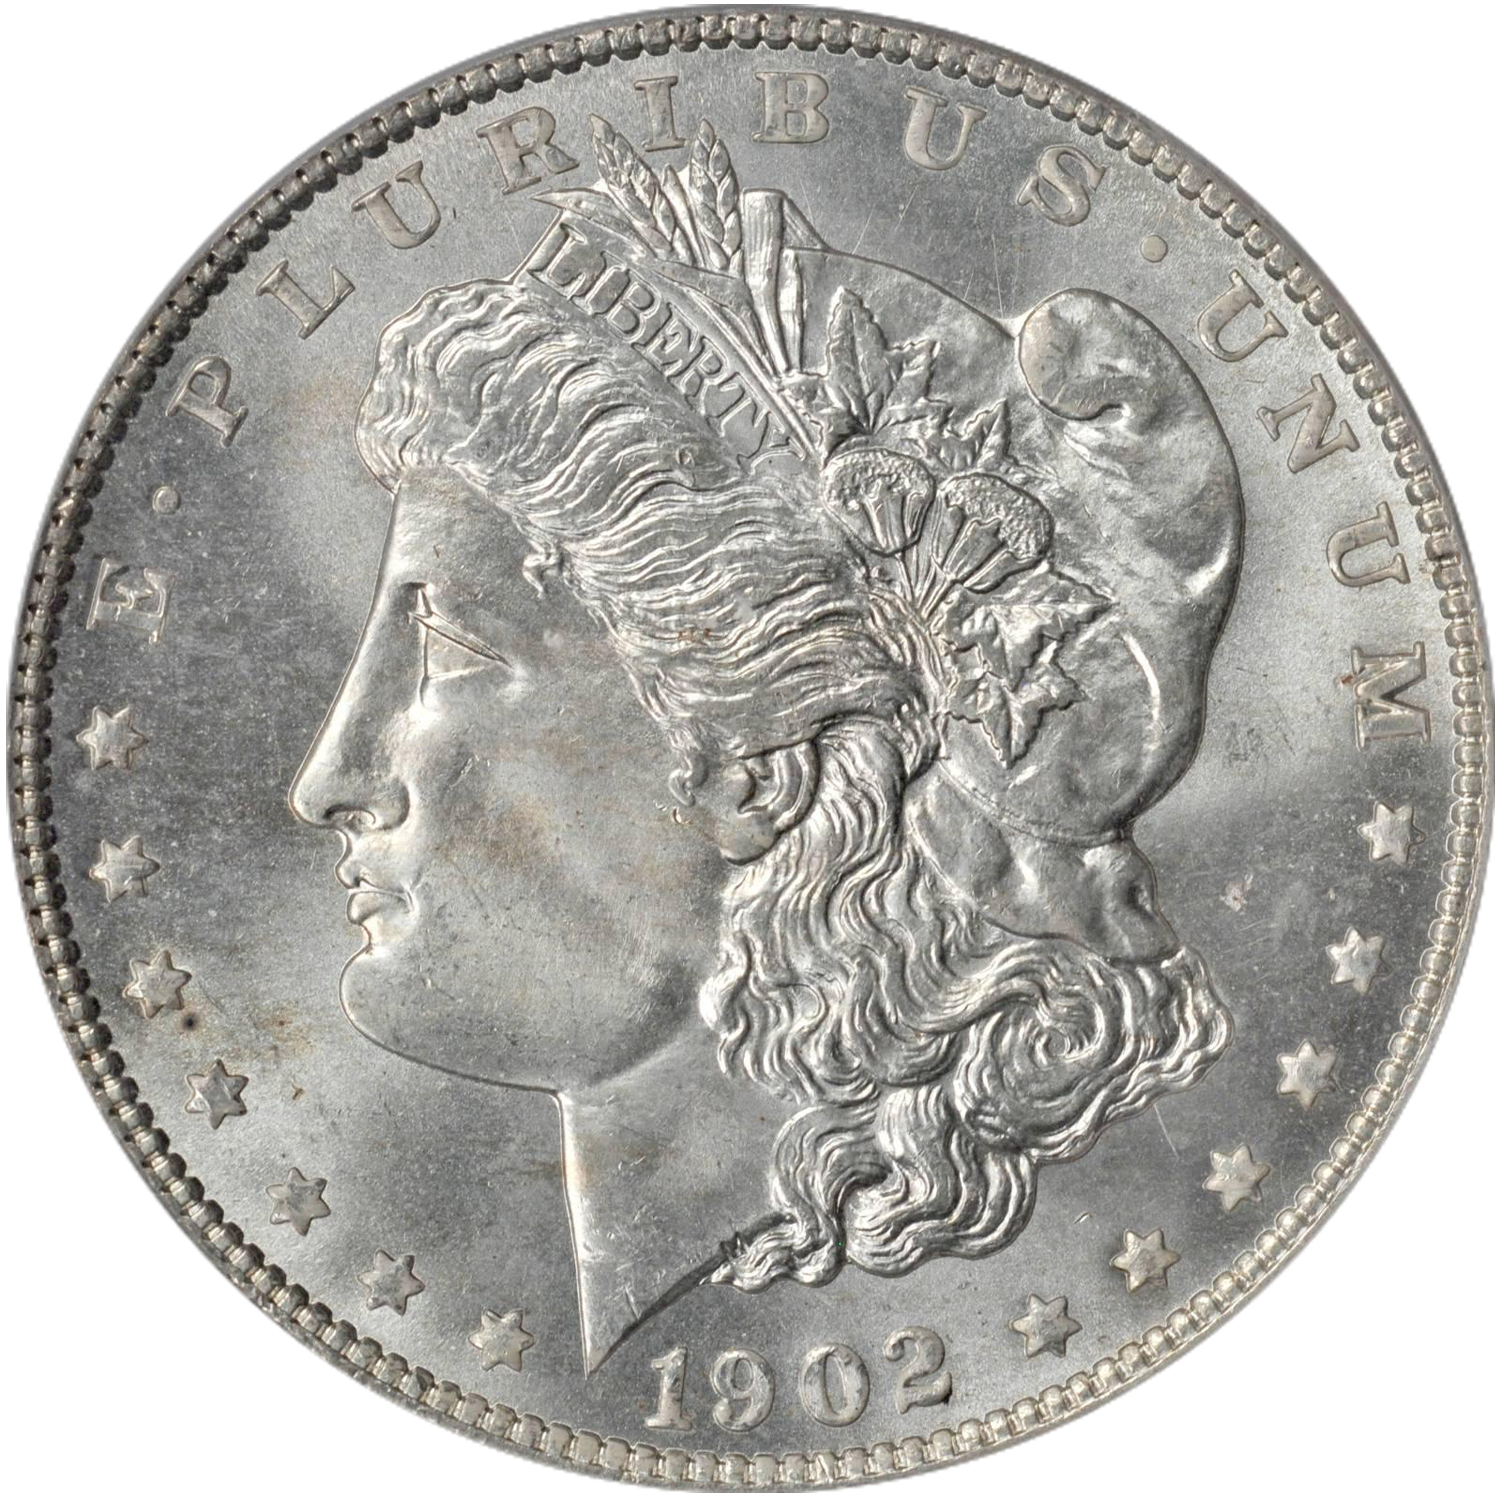 1902 new orleans mint morgan silver dollar value